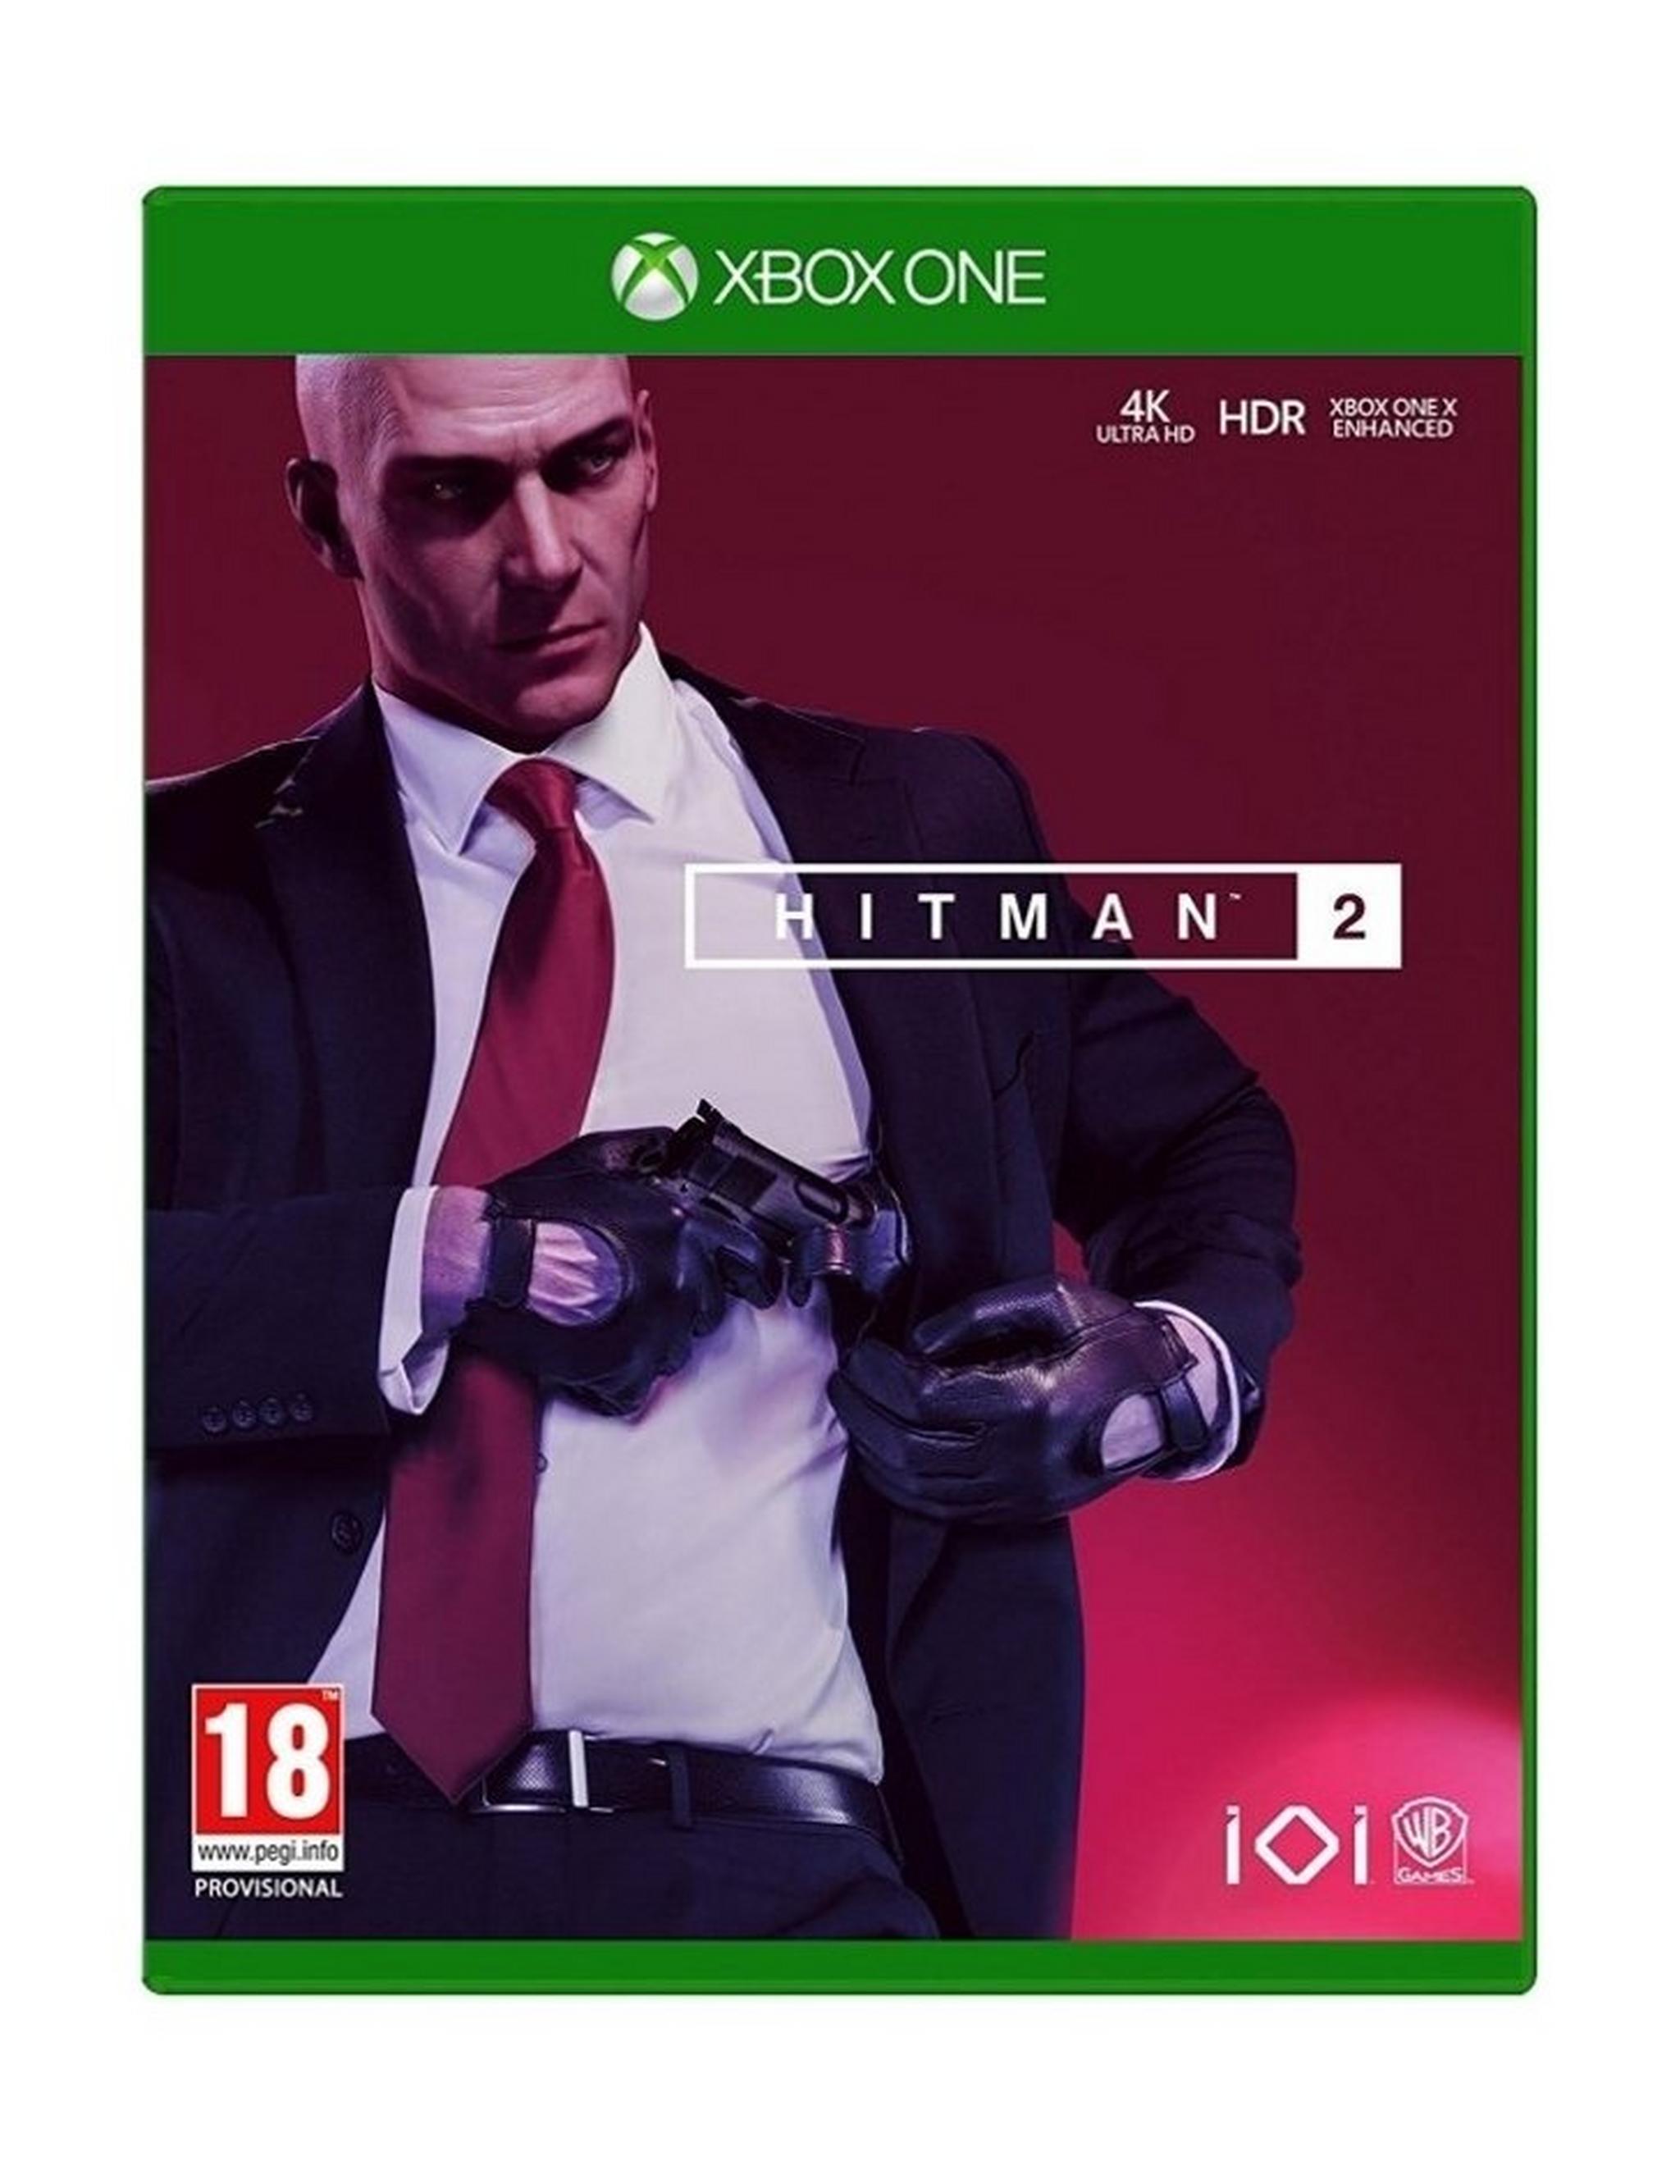 Hitman 2 - Xbox One Game